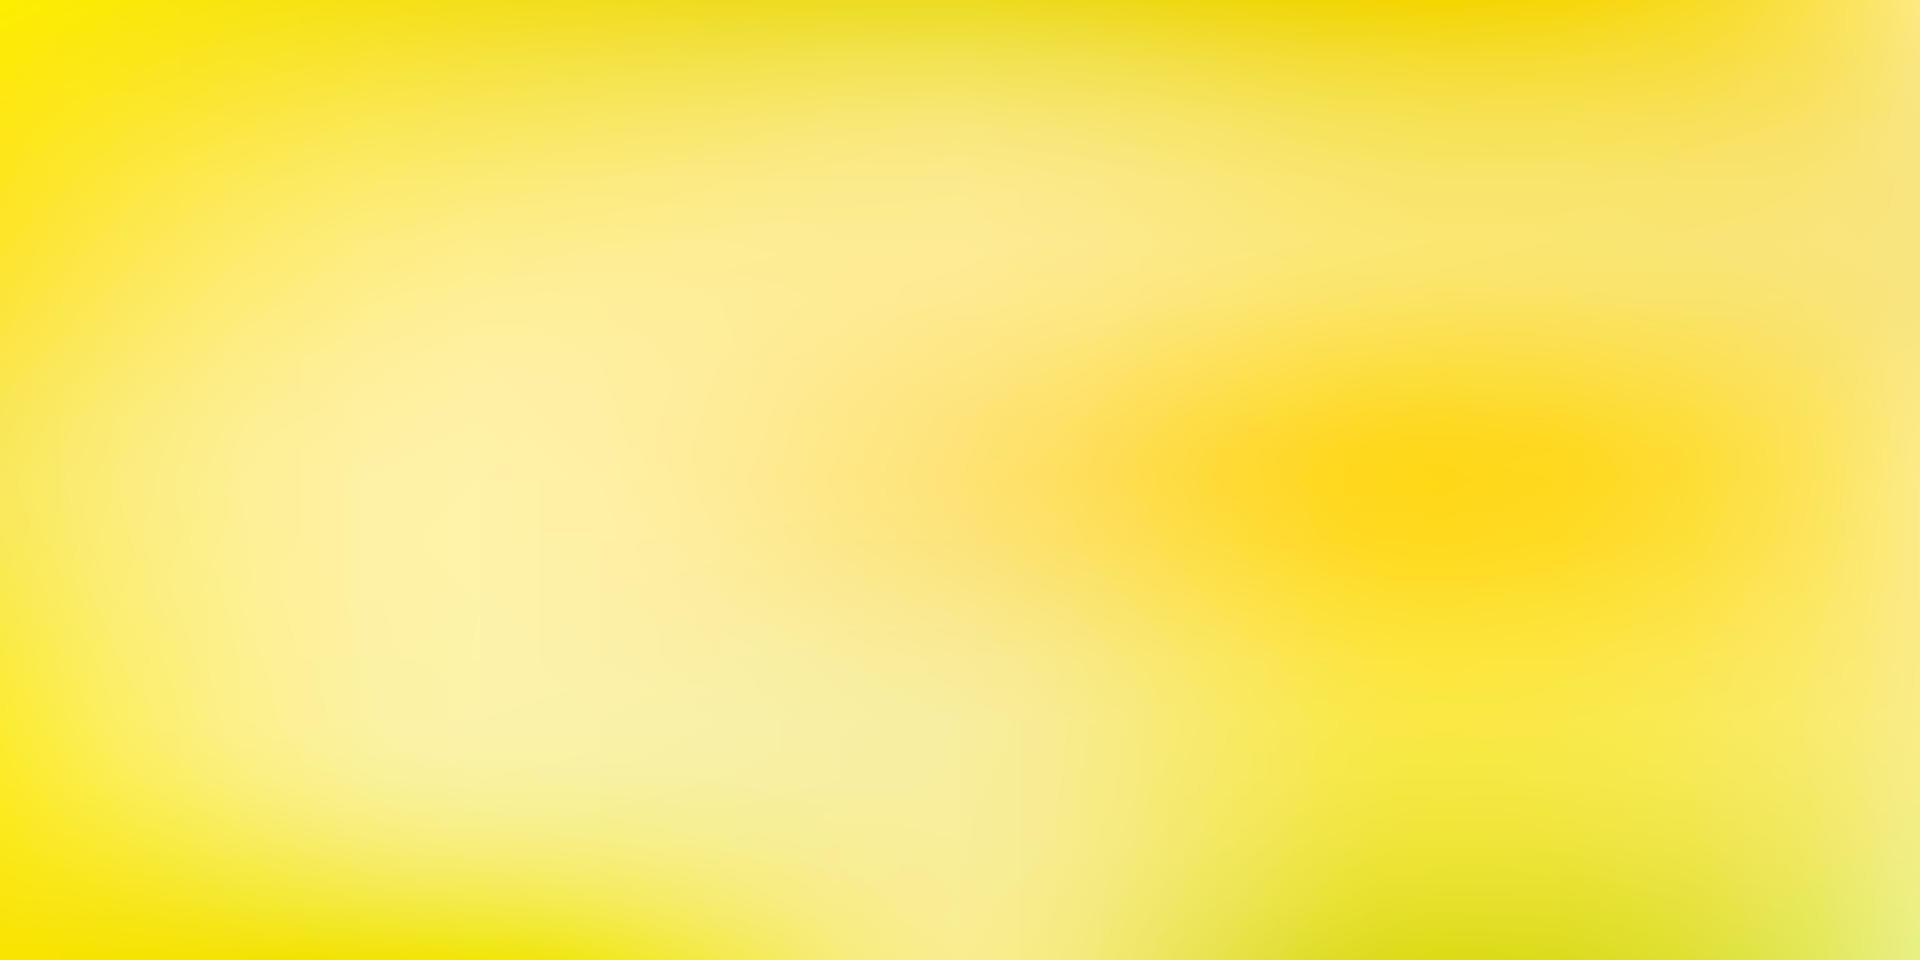 textura de desfoque de gradiente de vetor verde e amarelo claro.